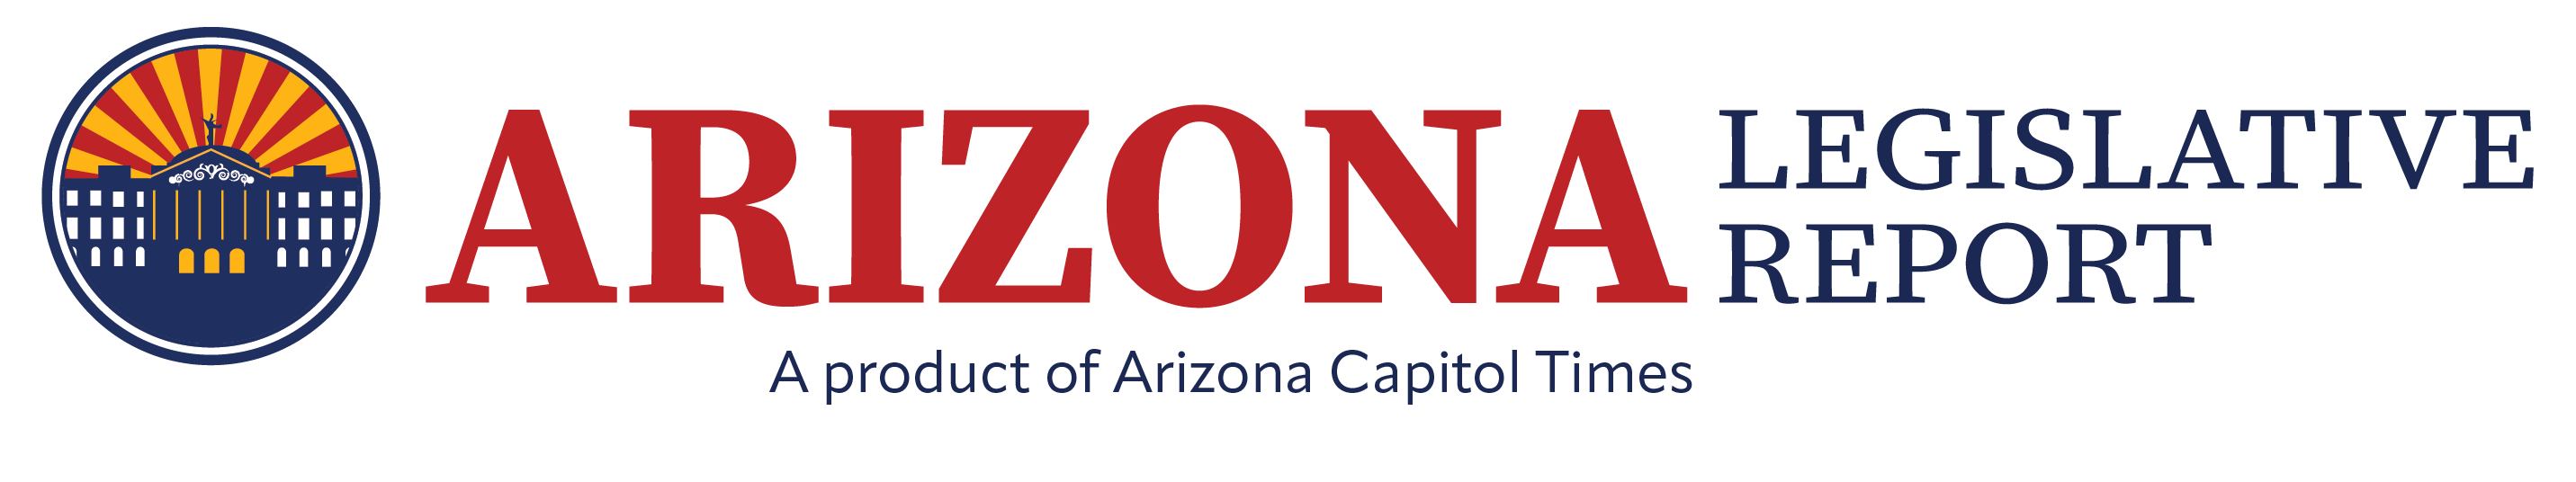 Arizona Legislative Report